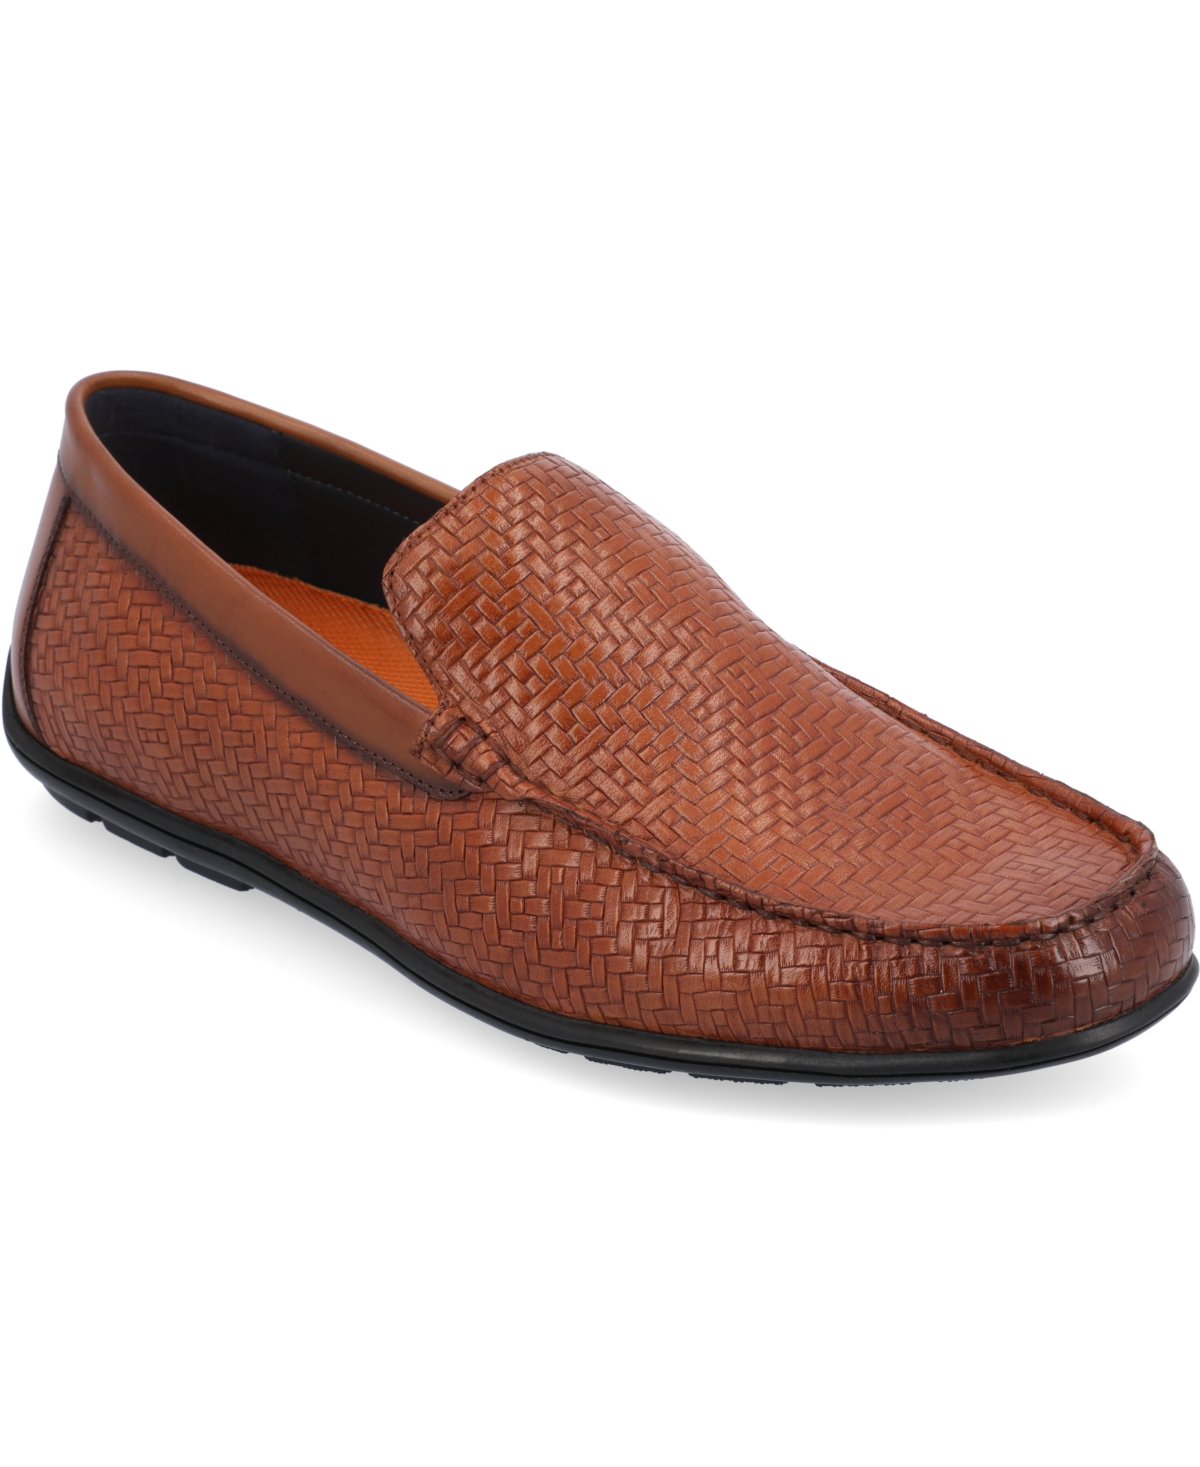 Men's Carter Moc Toe Driving Loafer Dress Shoes - Cognac